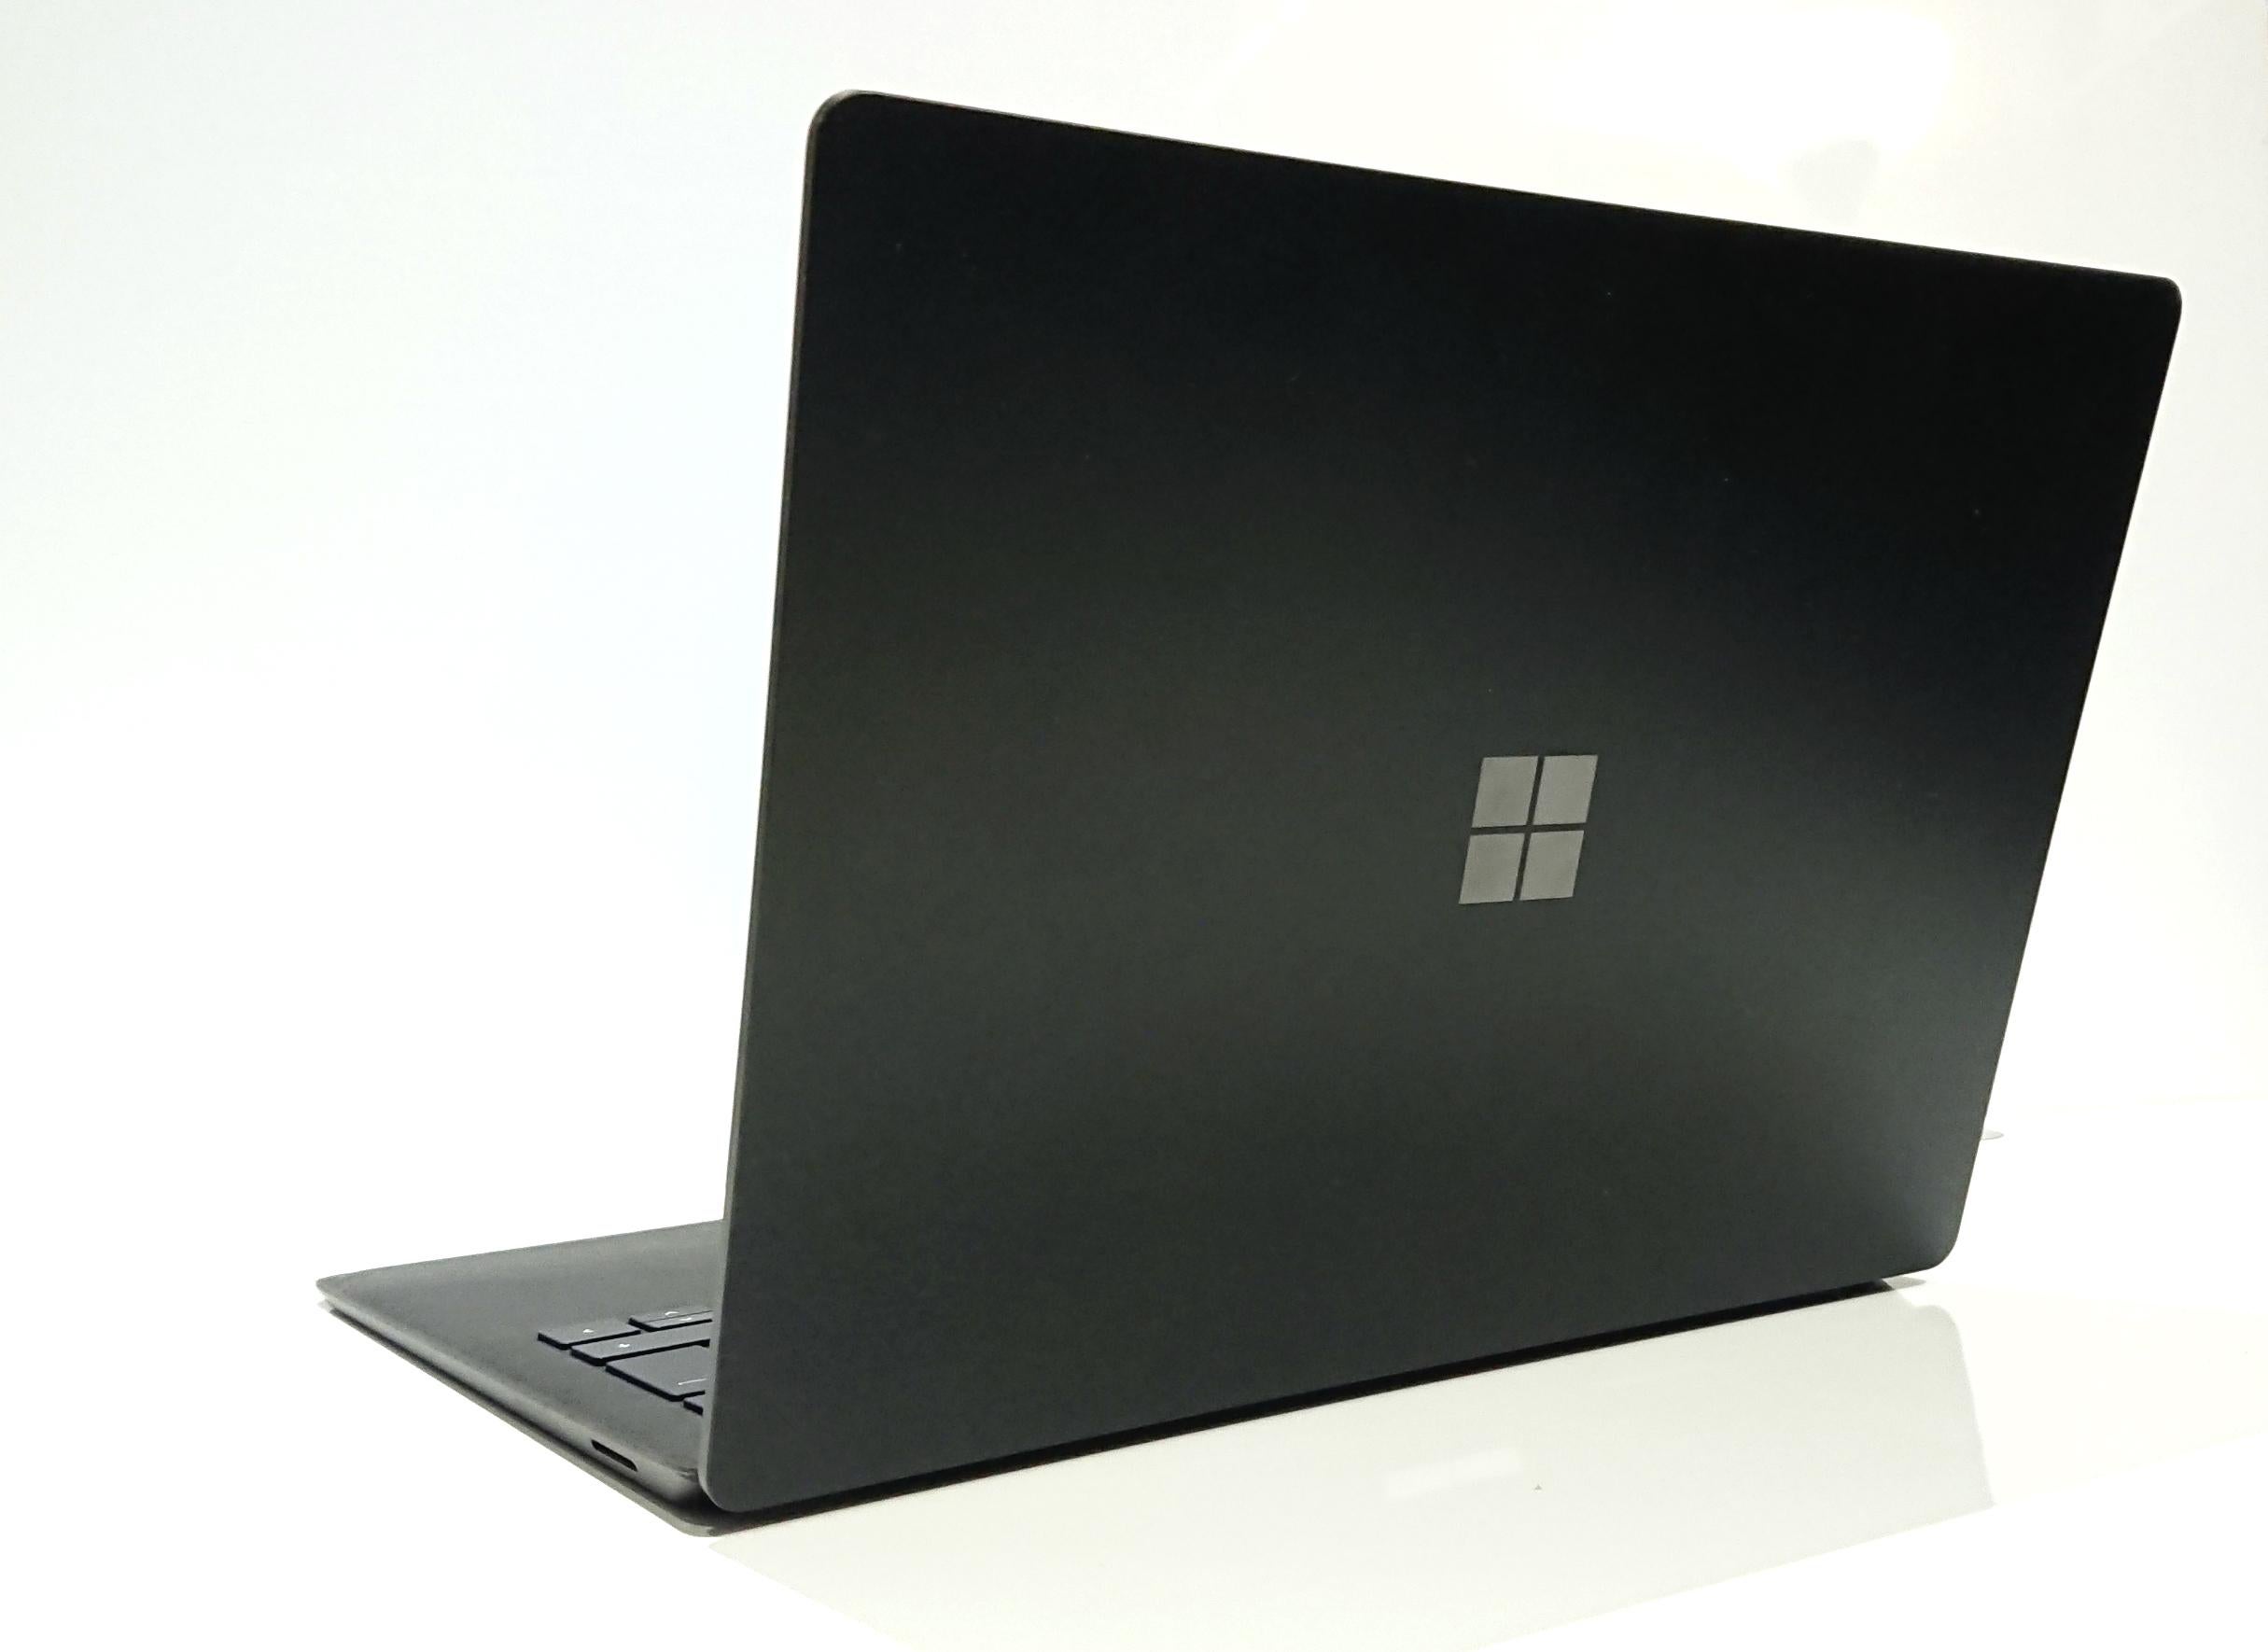 Microsoft Surface Laptop 2 (2018) Review: Impressive Features, Design